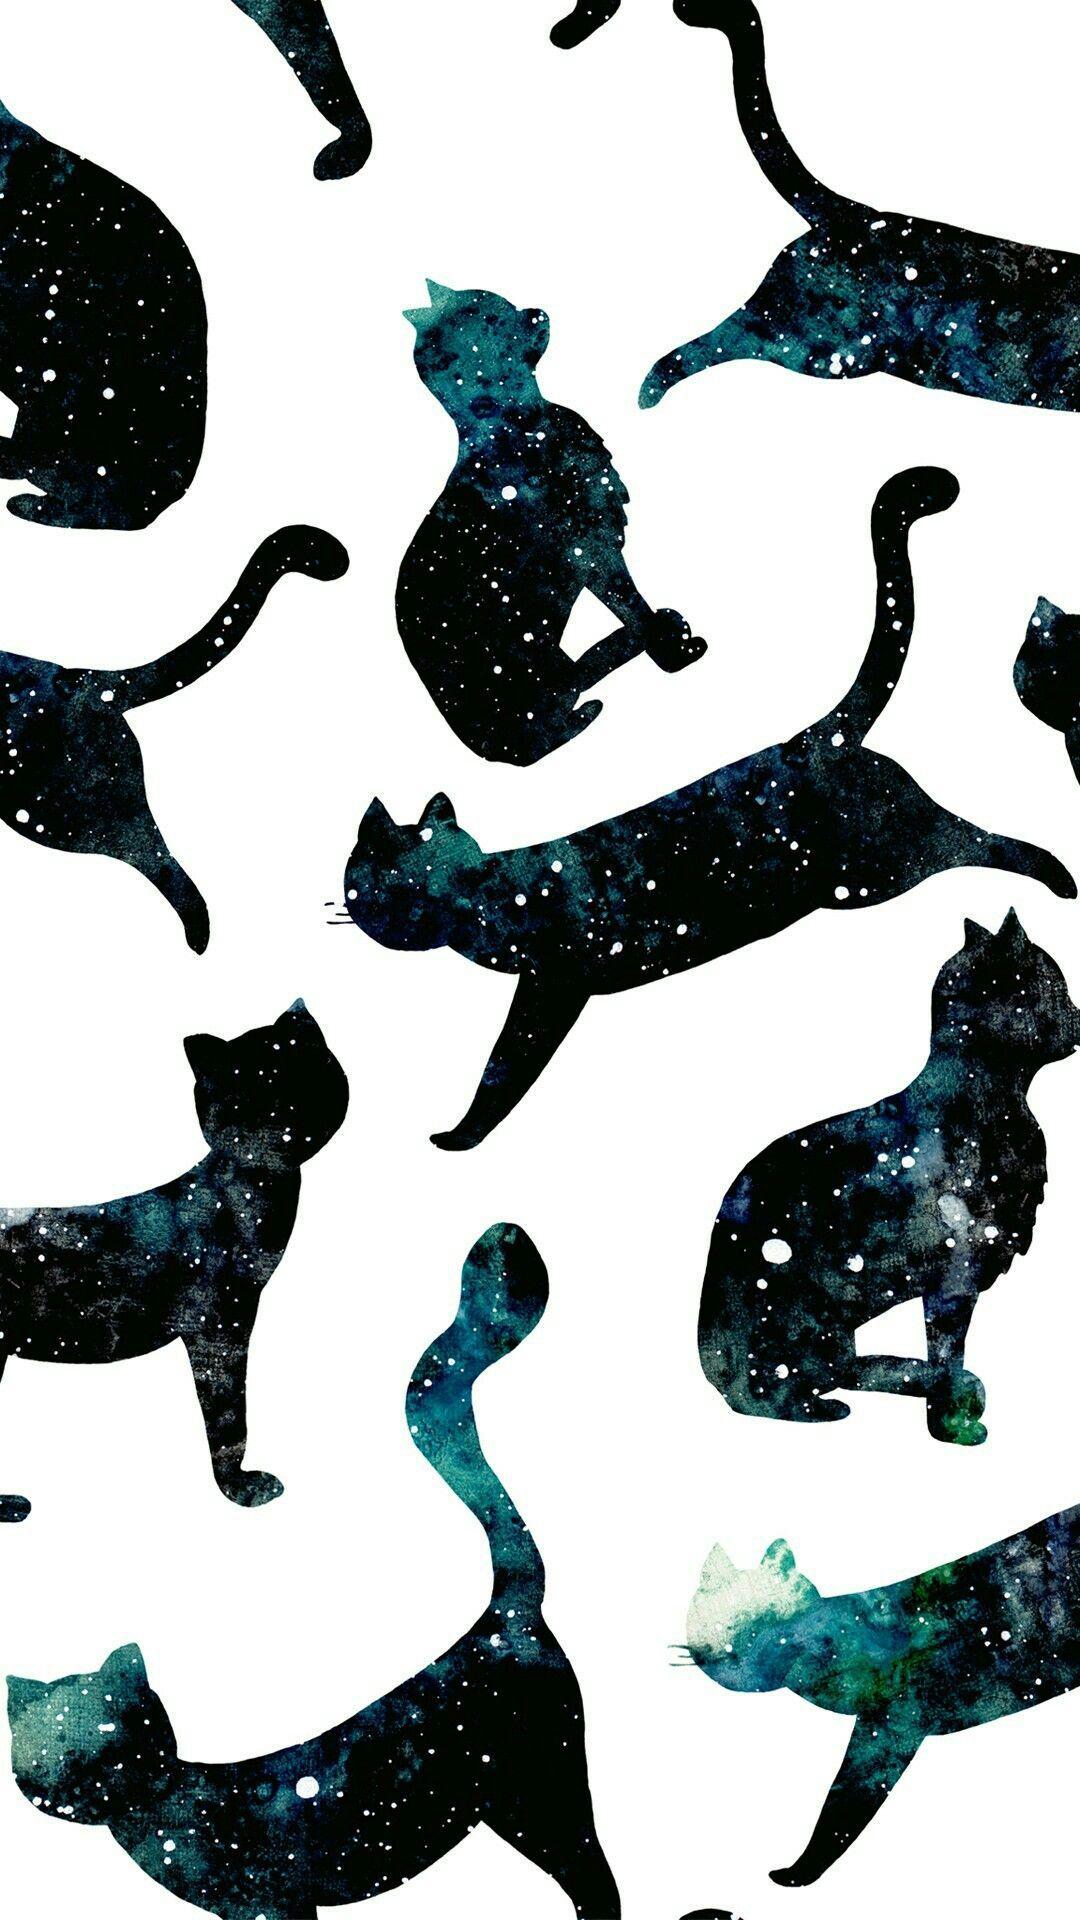 Wallpaper, cat, Galaxy. Neko wall paper ideation. Cat